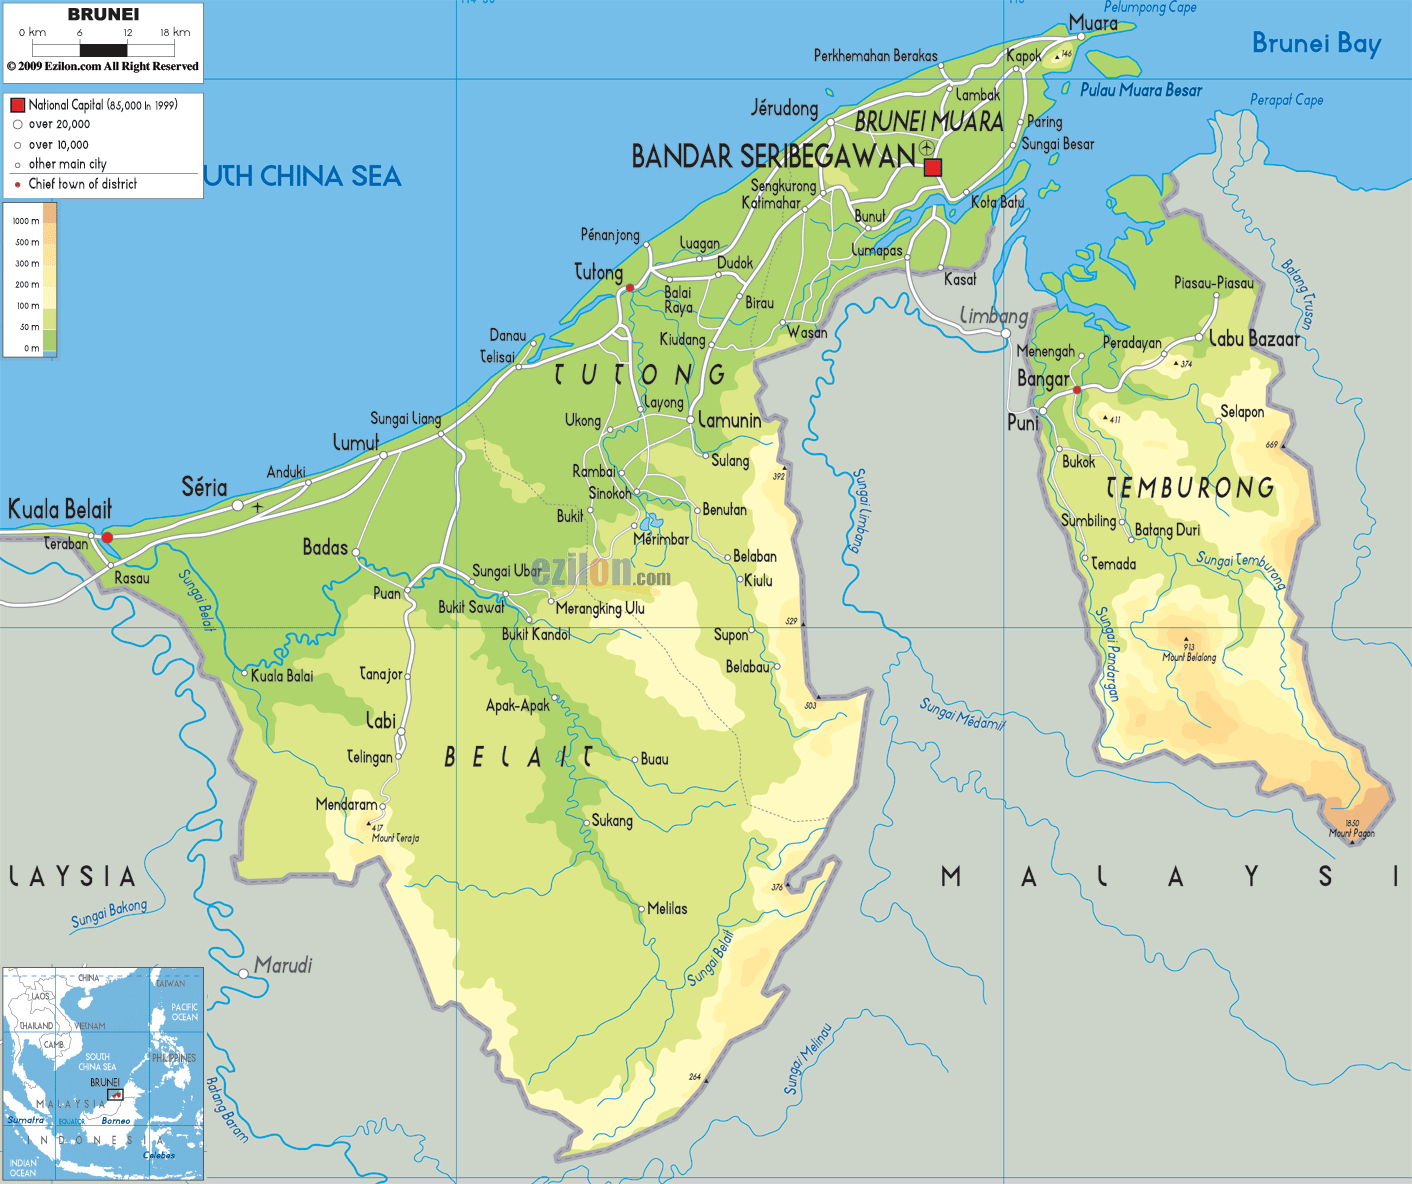 Brunei fiziki haritasi